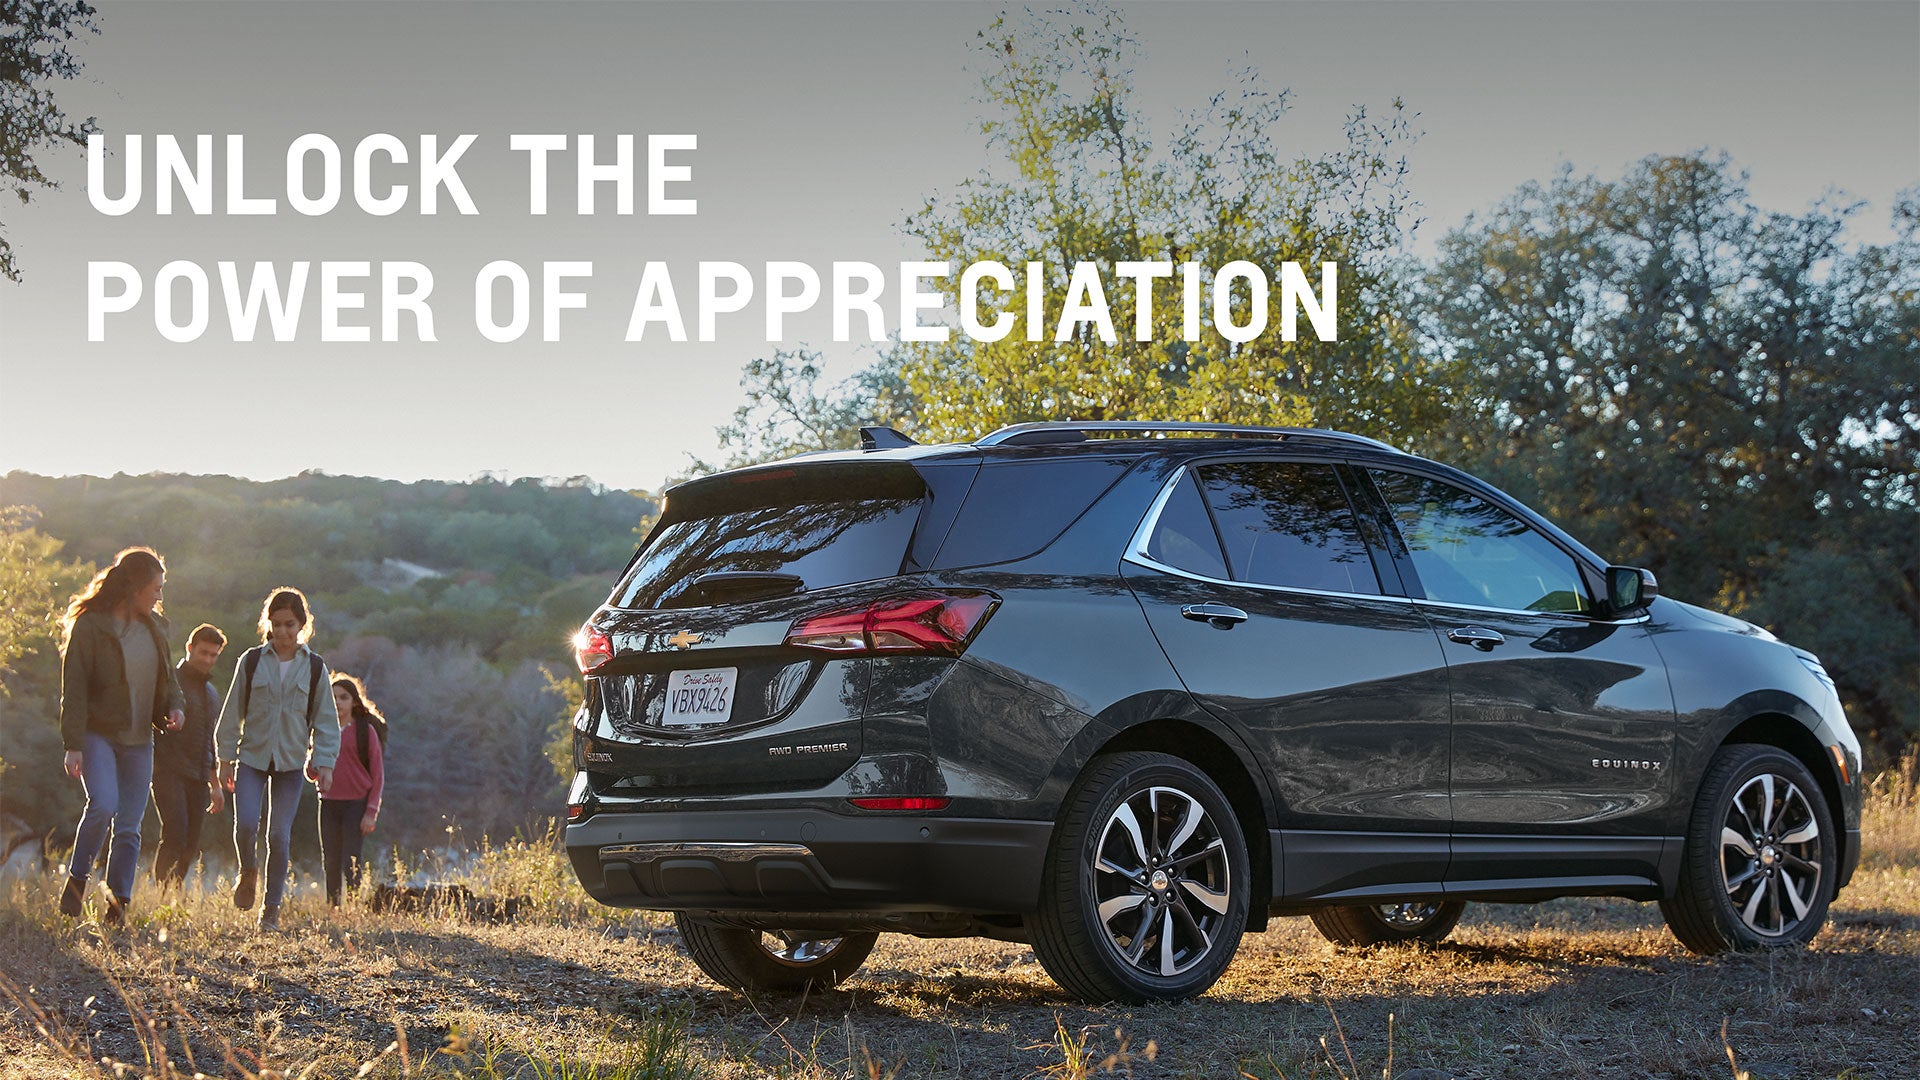 Unlock the power of appreciation | American Chevrolet in Modesto CA